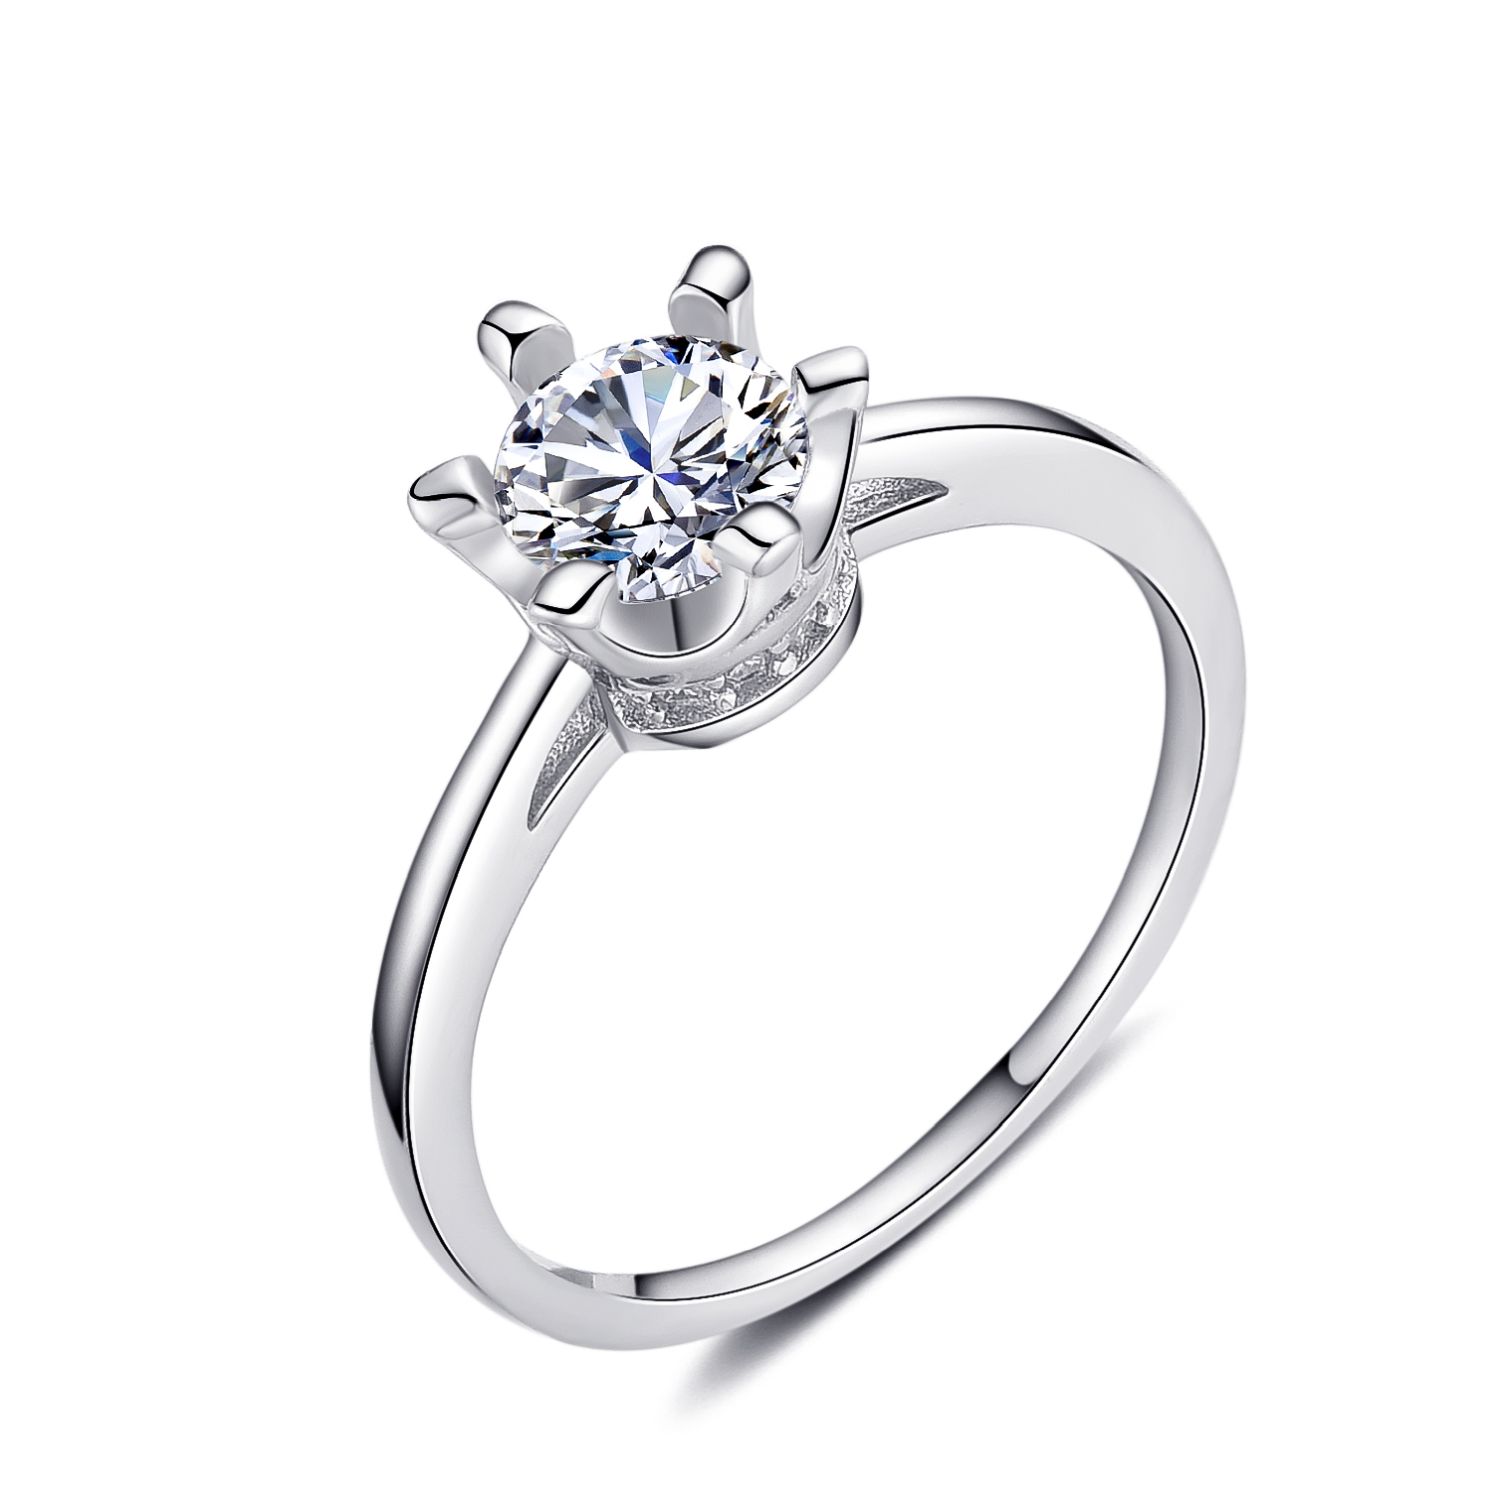 MOISS Moiss stříbrný prsten KORUNKA R0000546 Velikost 63 mm R0000553